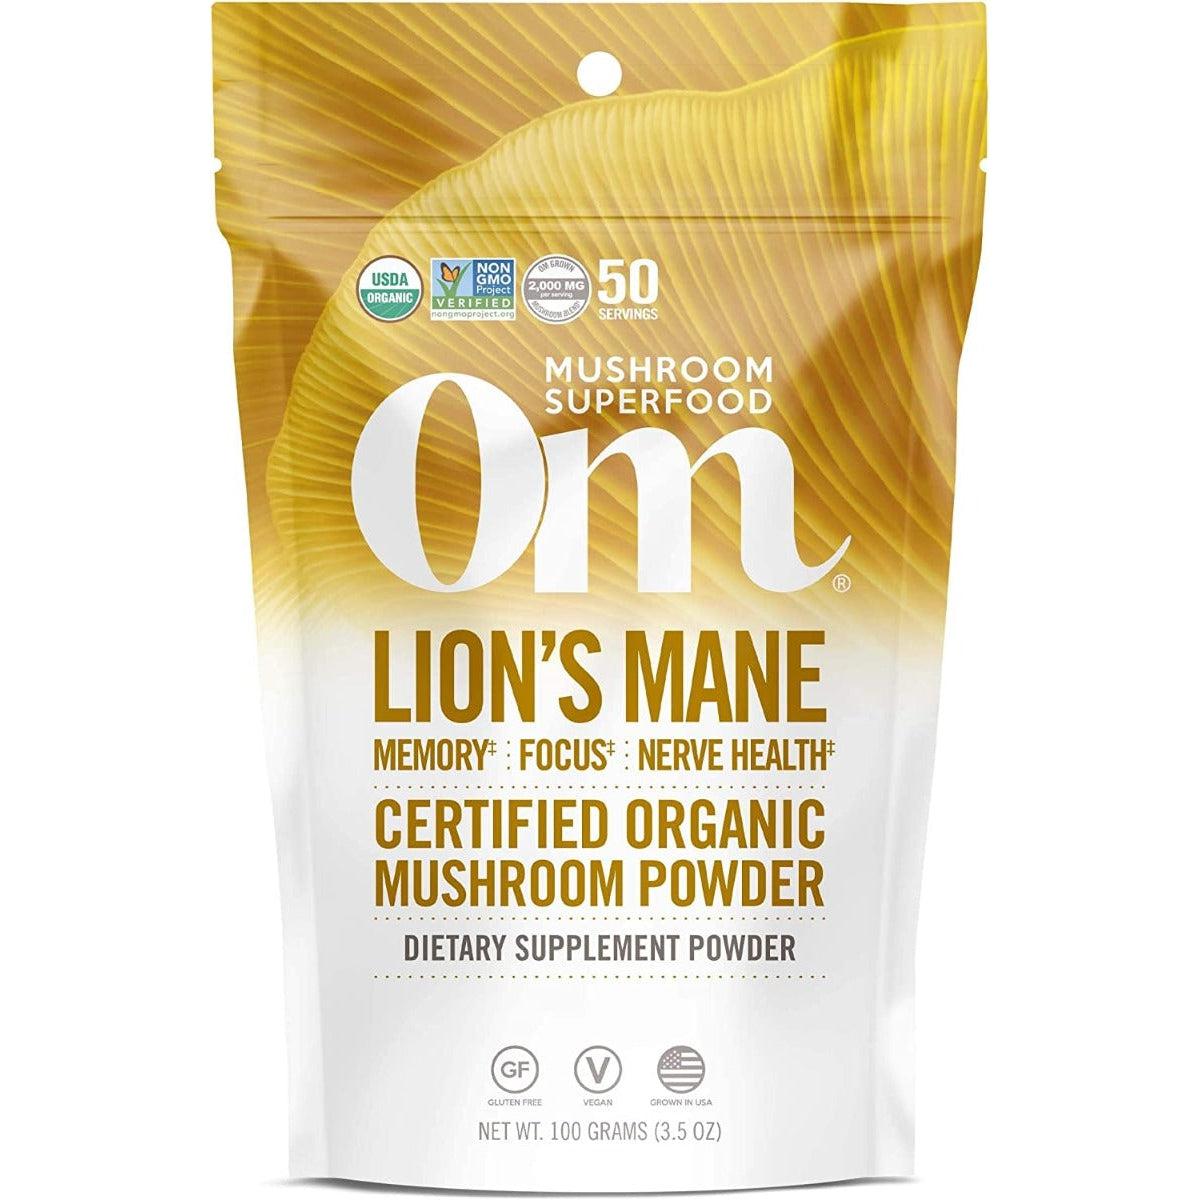 Om Mushroom Superfood Lion's Mane Organic Mushroom Powder Gluten Free 100g